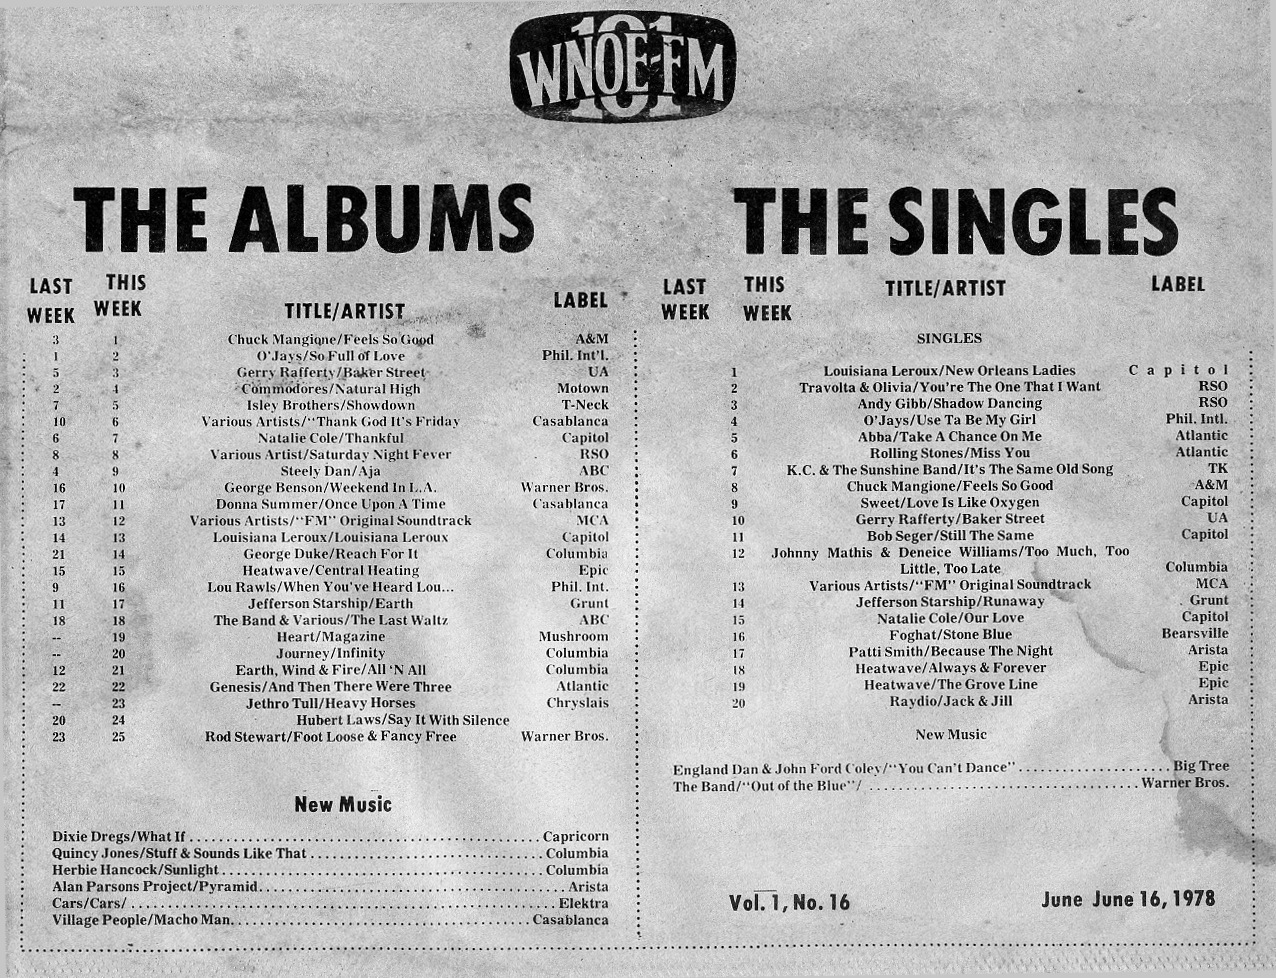 WNOE-FM Music Chart 6/16/78